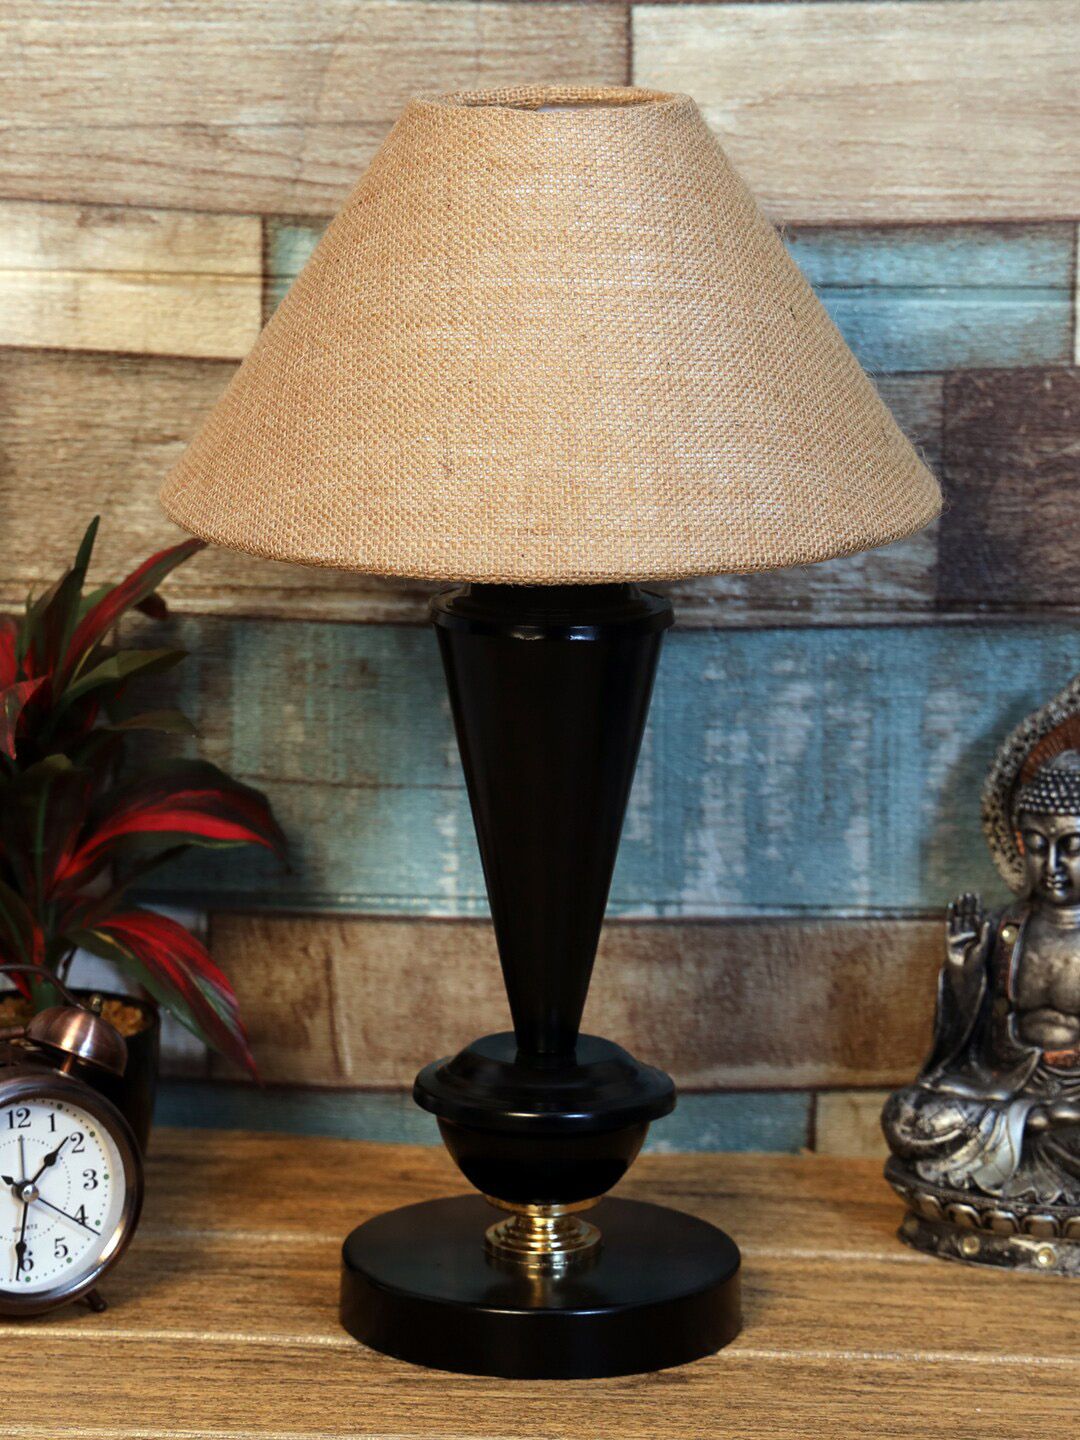 foziq Black & Brown Textured Table Lamp Price in India